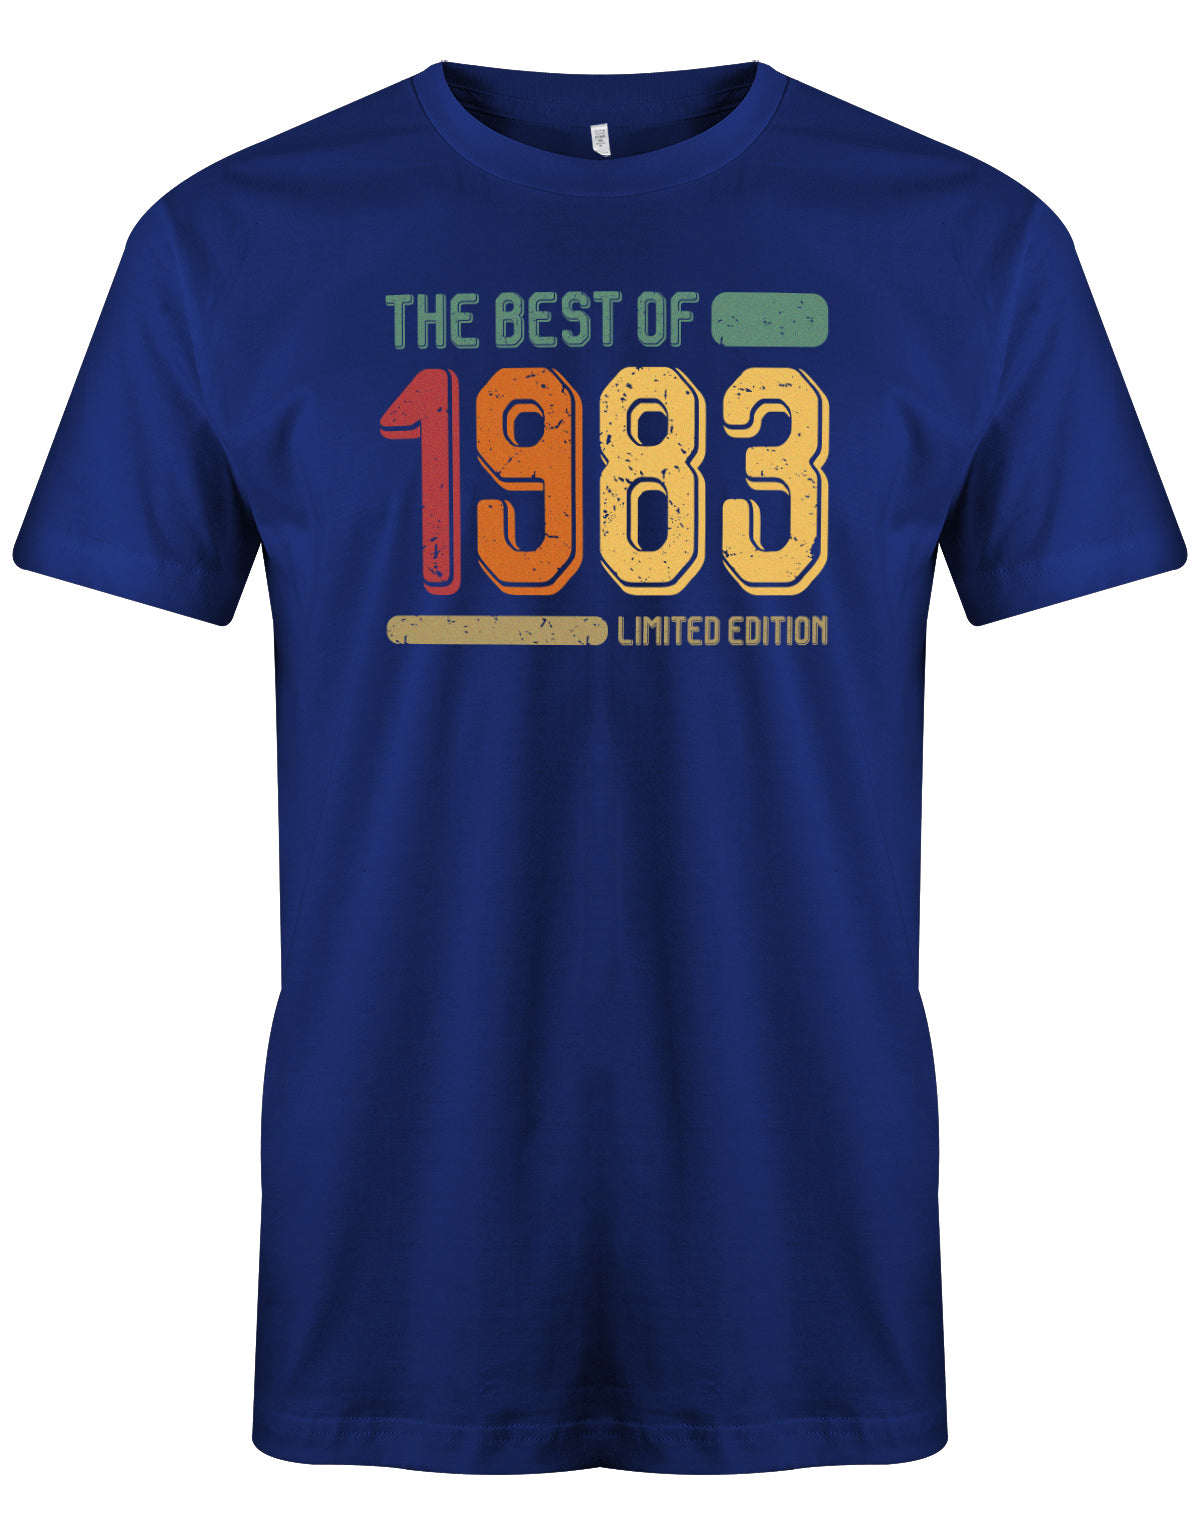 The best of 1983 Limited Edition Vintage TShirt - T-Shirt 40 Geburtstag Männer myShirtStore Royalblau